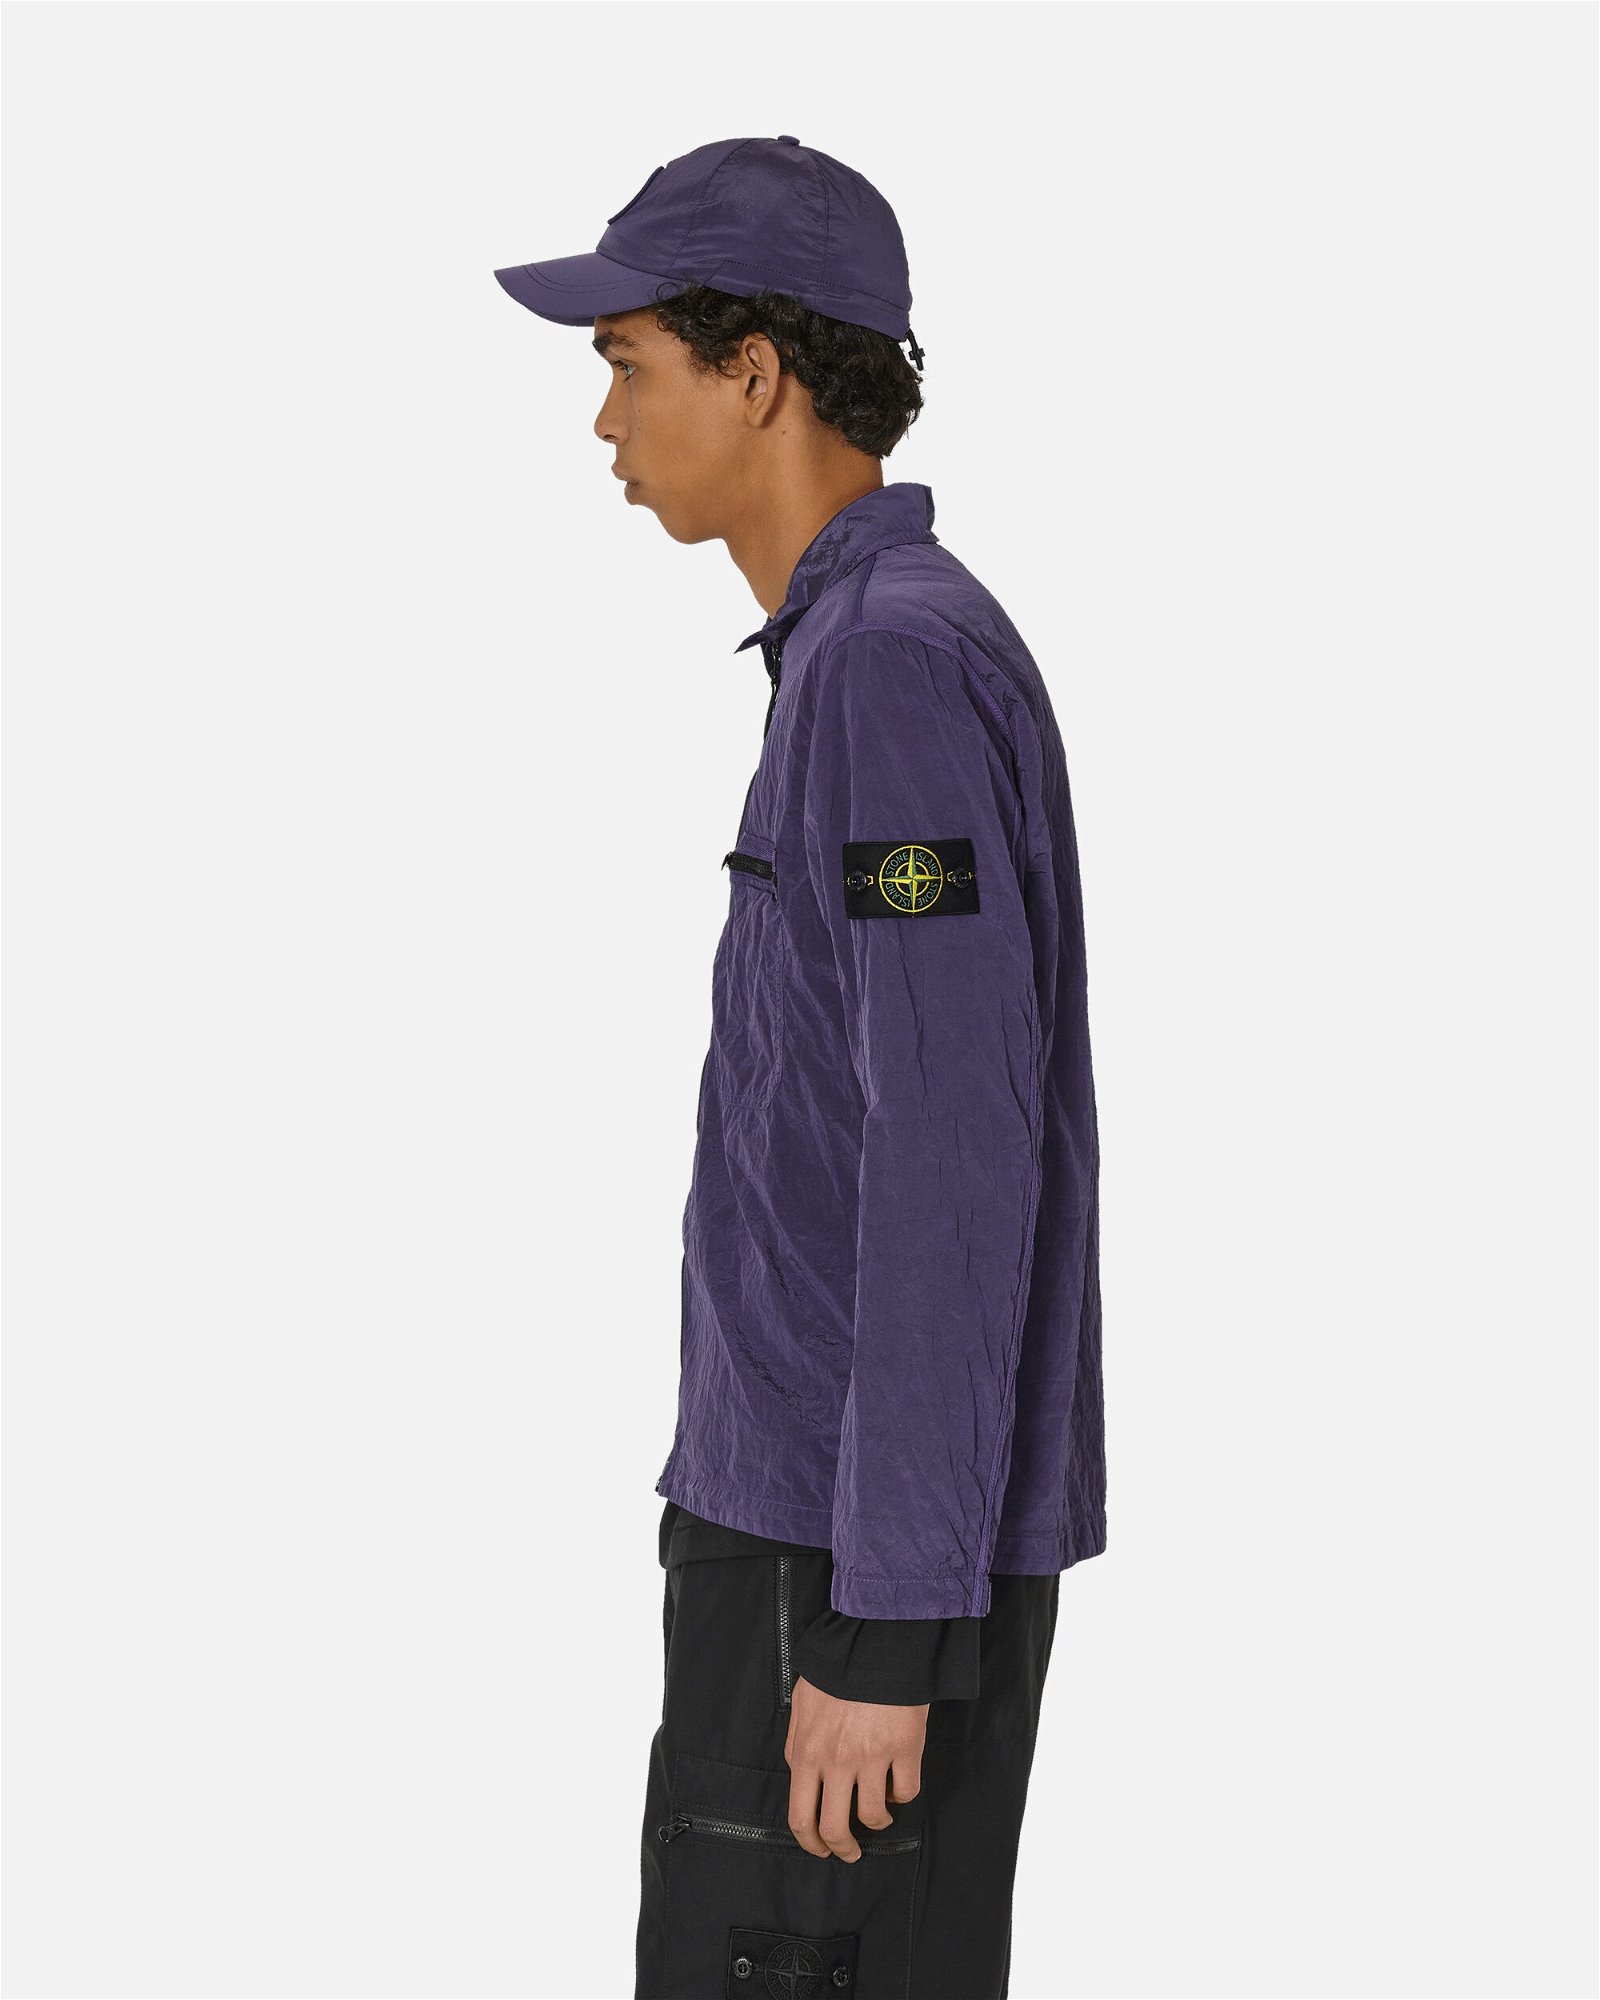 Stone Island Purple Patch Jacket